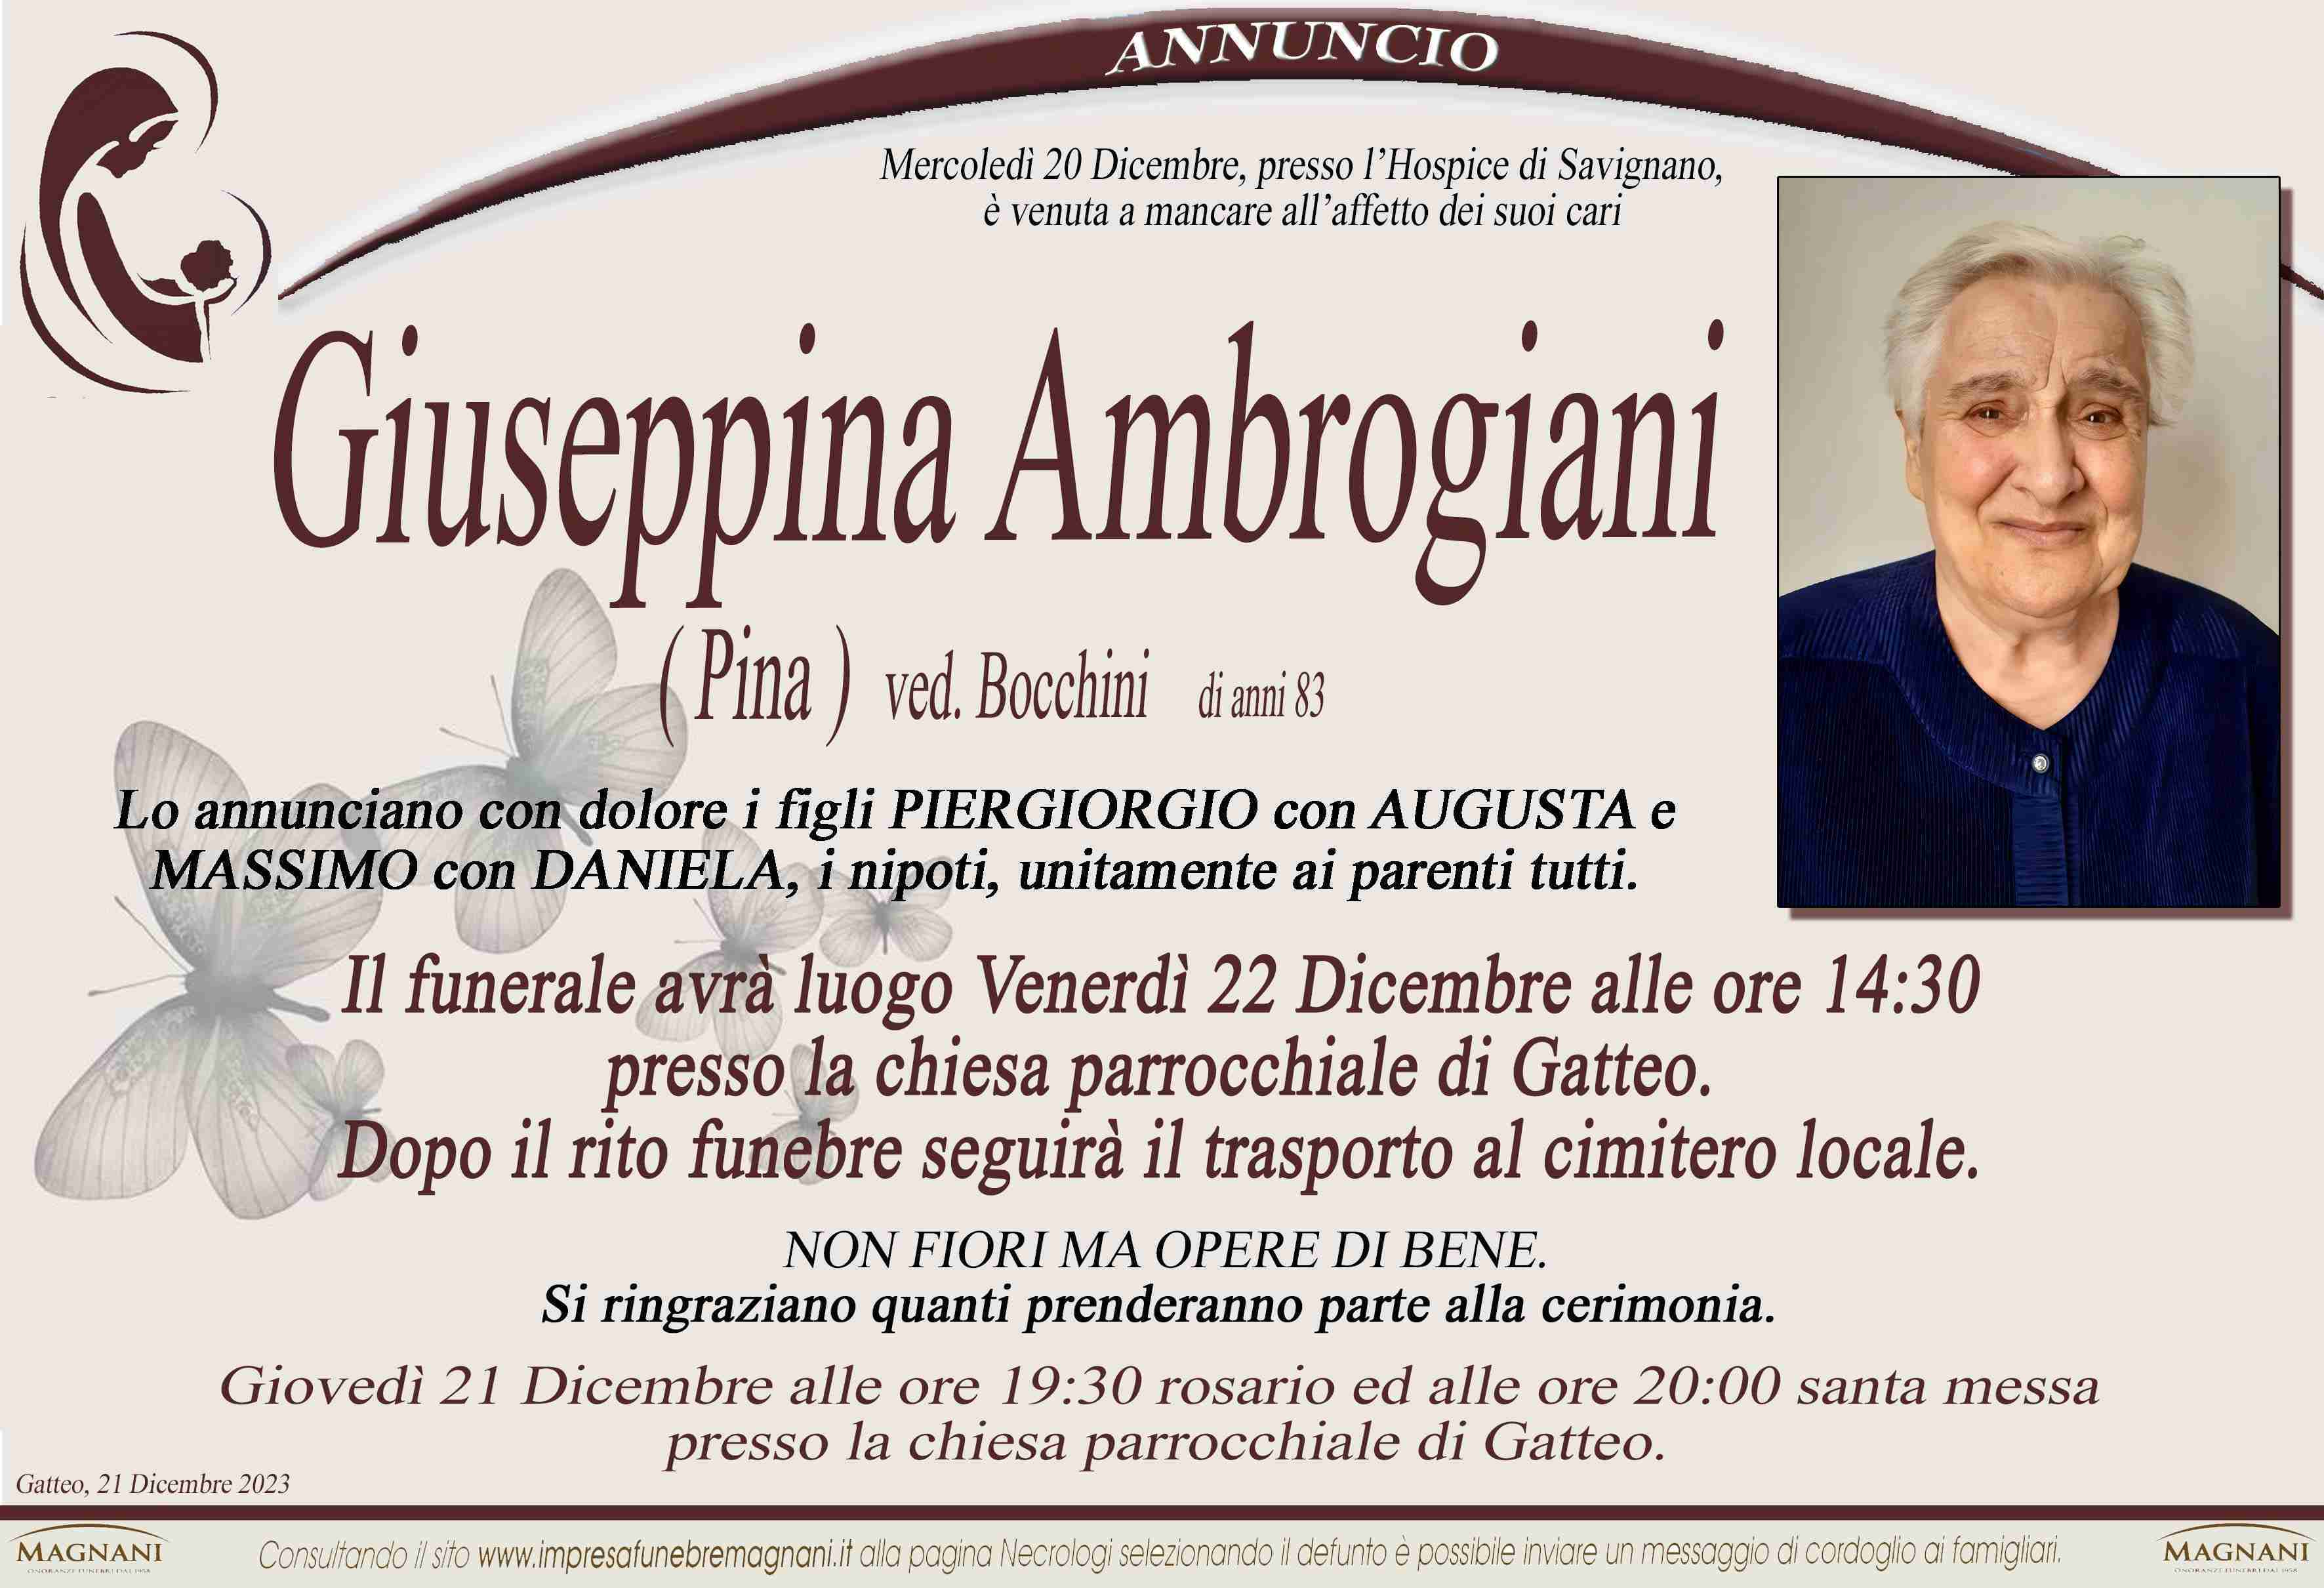 Giuseppina Ambrogiani (Pina)